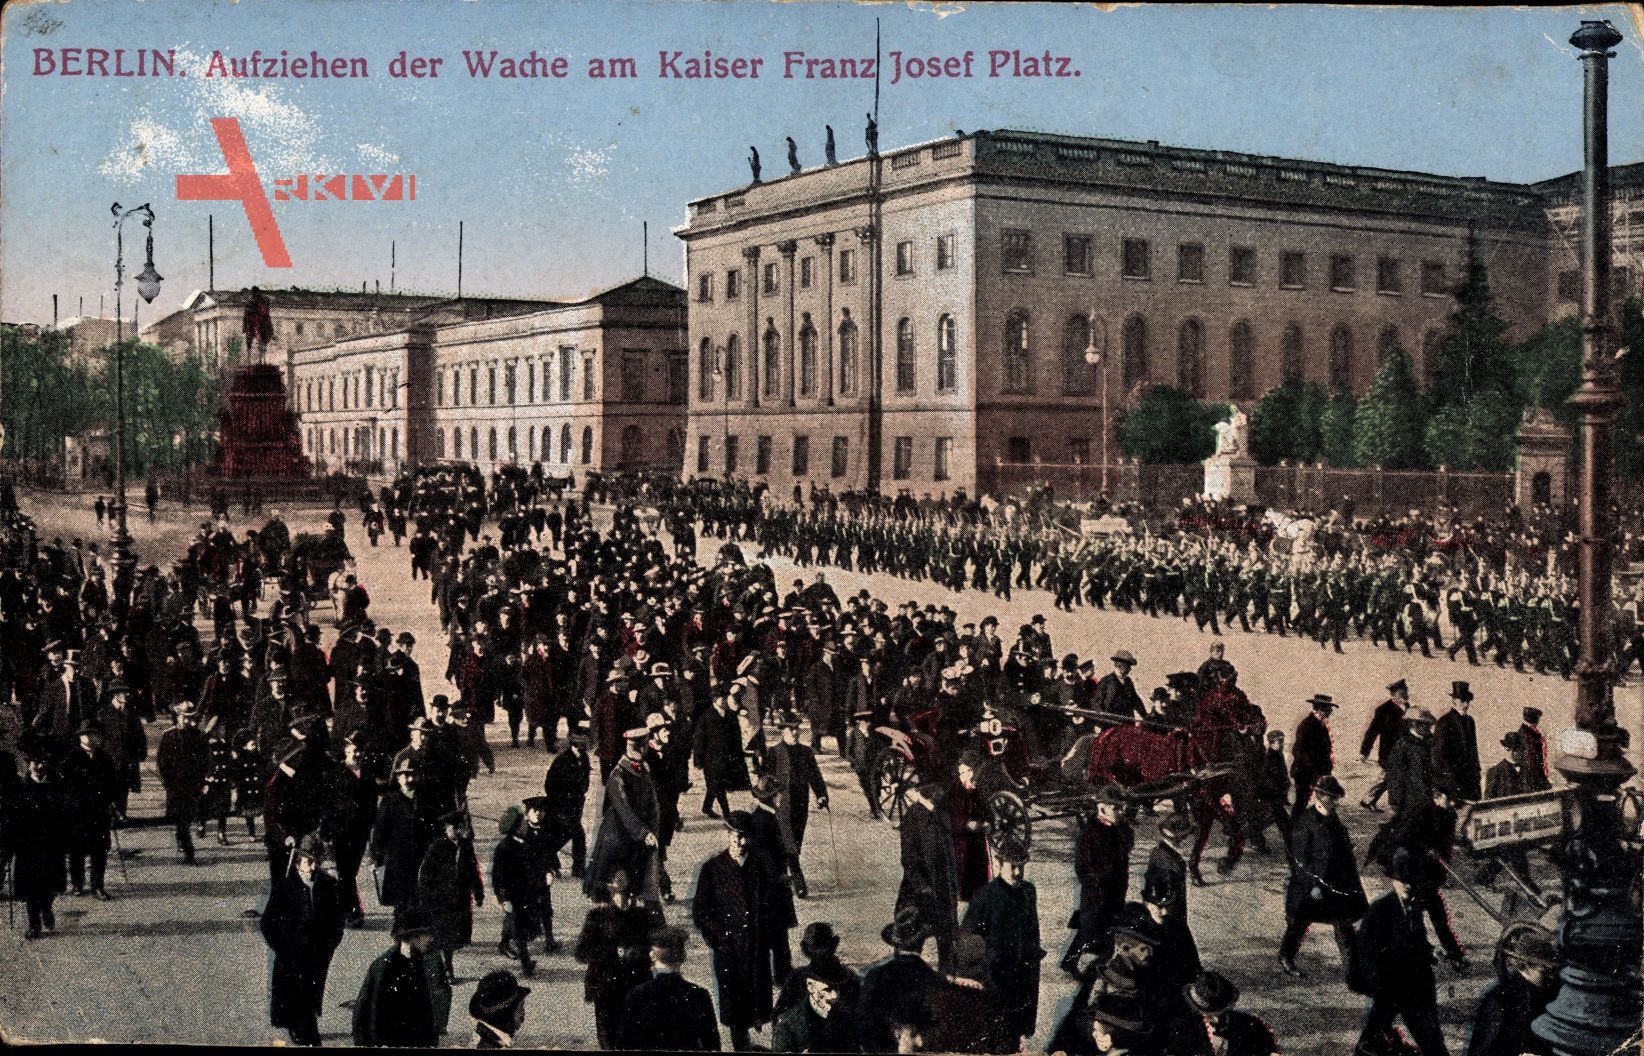 Berlin Mitte, Aufziehen der Wache am Kaiser Franz Josef Platz, Bebelplatz